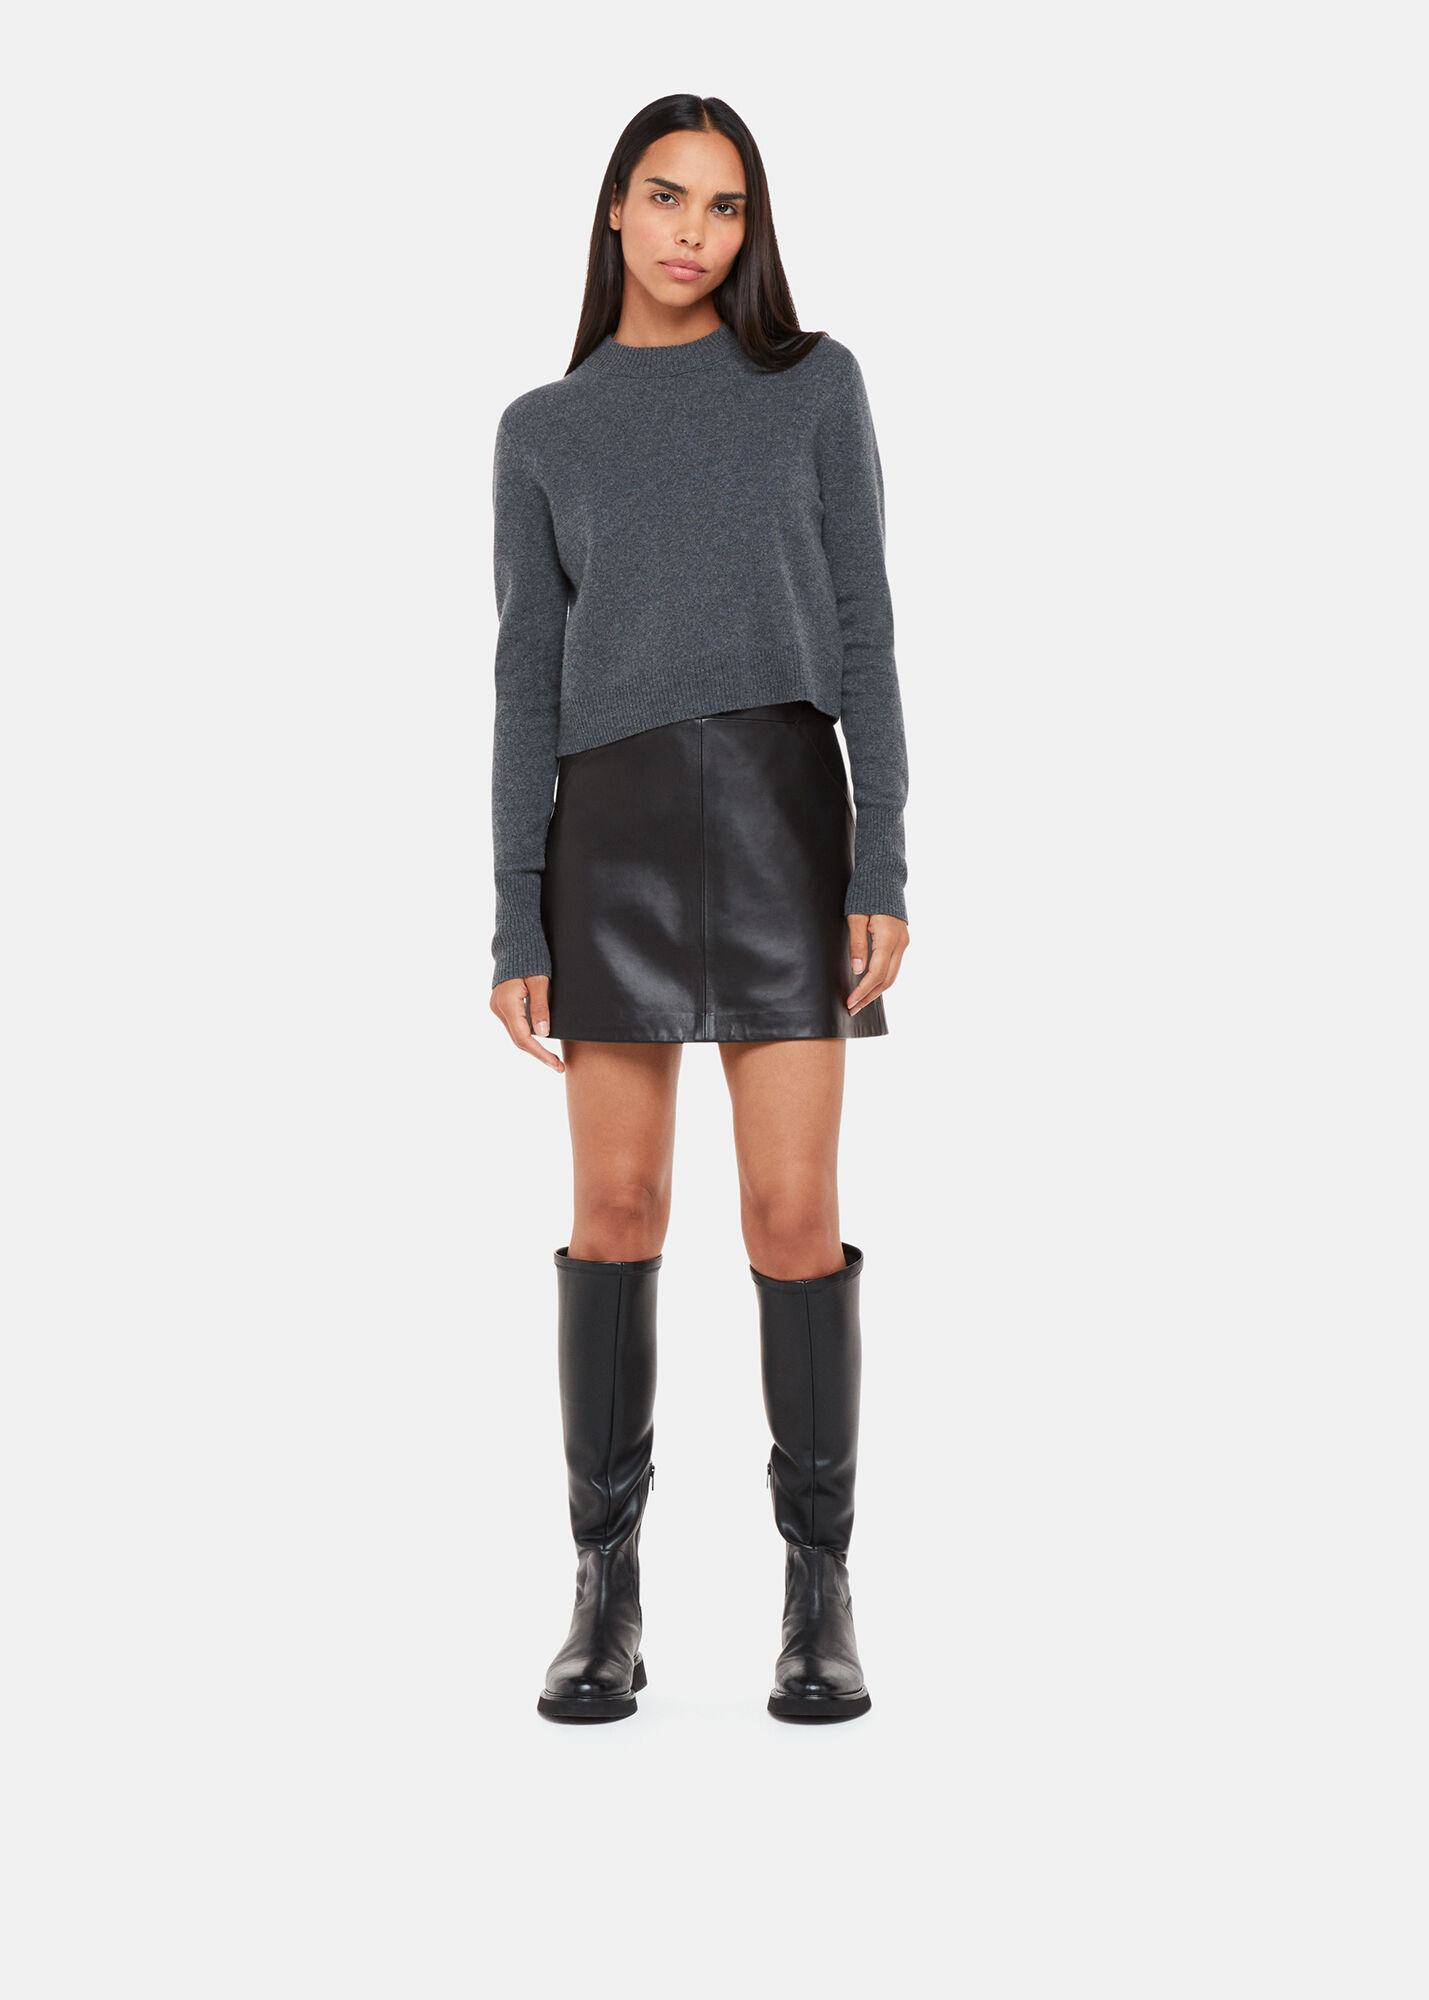 Black Leather A Line Skirt | WHISTLES | Whistles